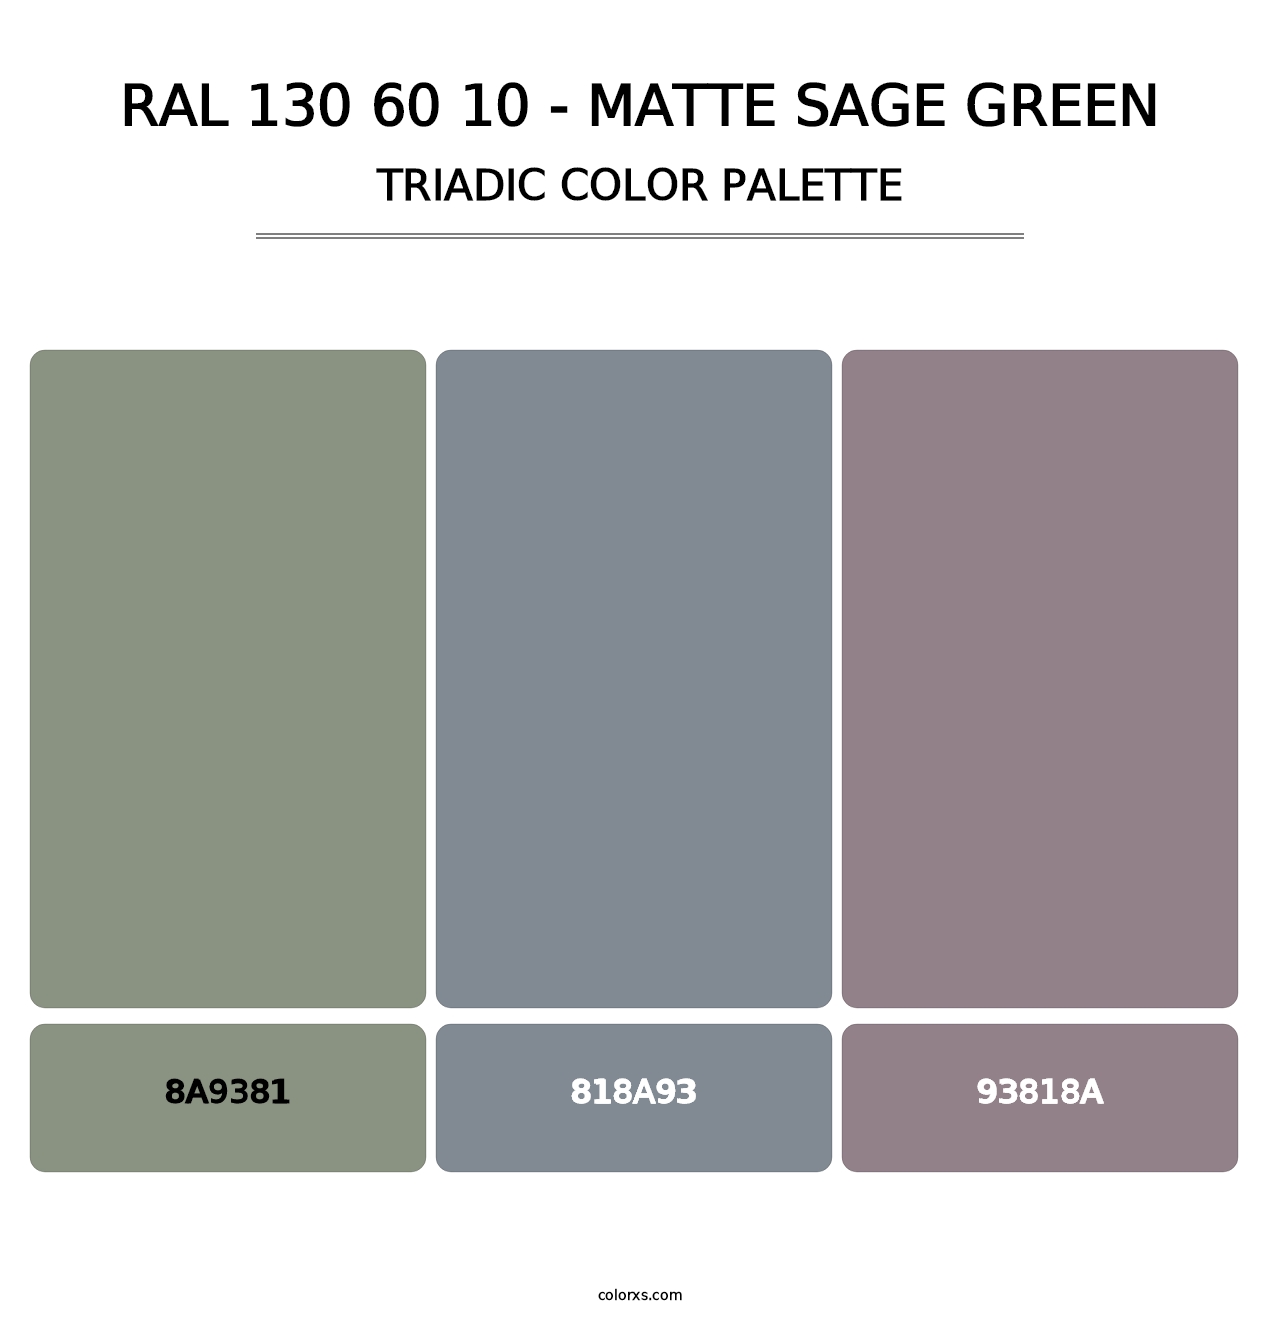 RAL 130 60 10 - Matte Sage Green - Triadic Color Palette